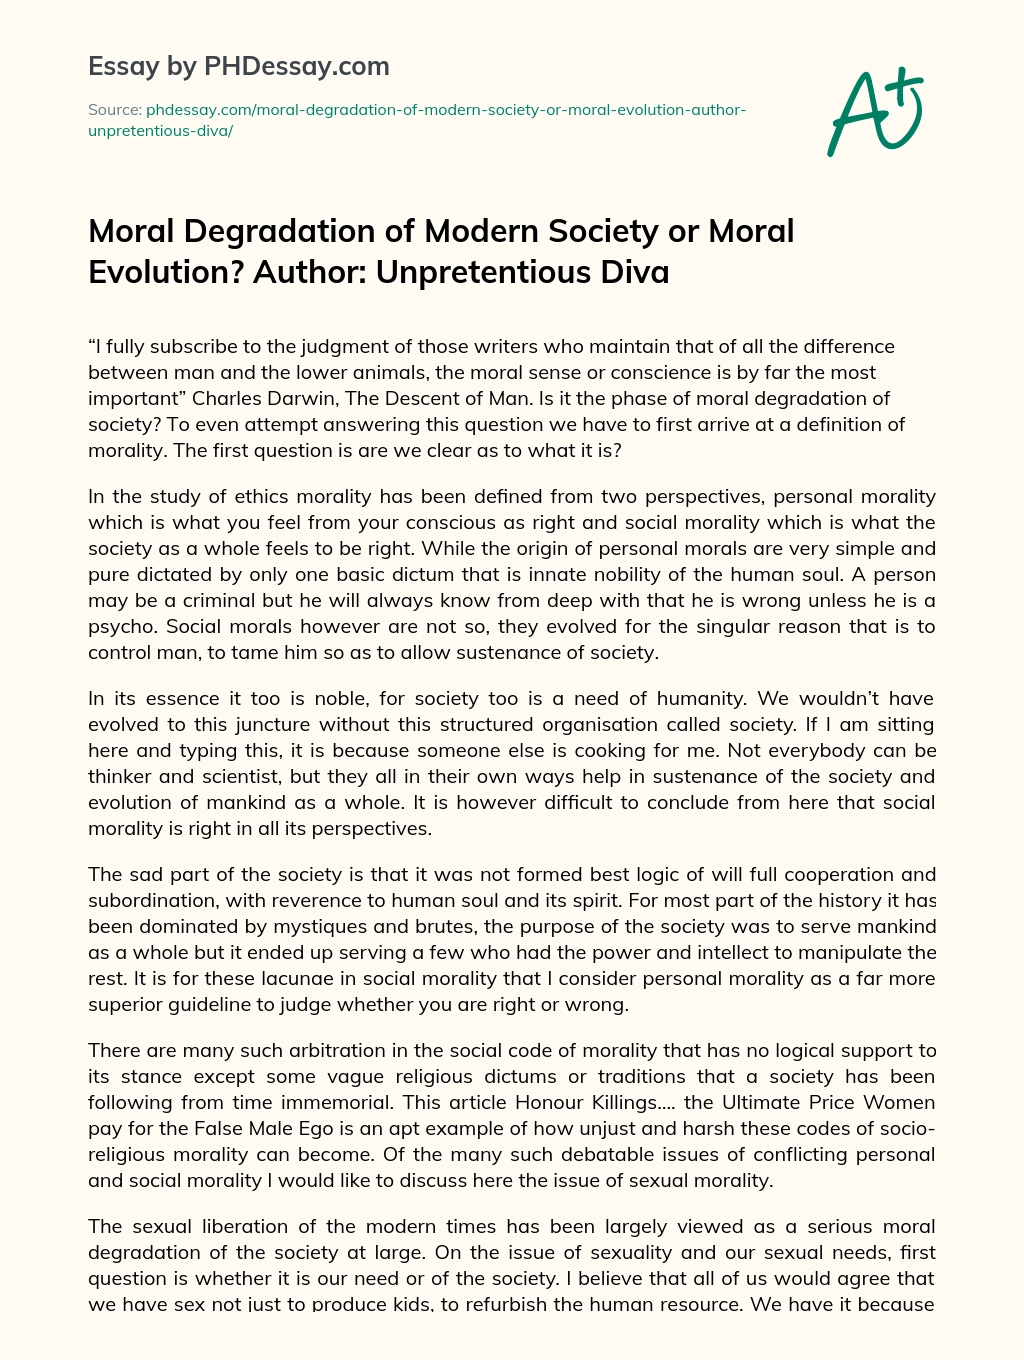 Moral Degradation of Modern Society or Moral Evolution? Author: Unpretentious Diva essay